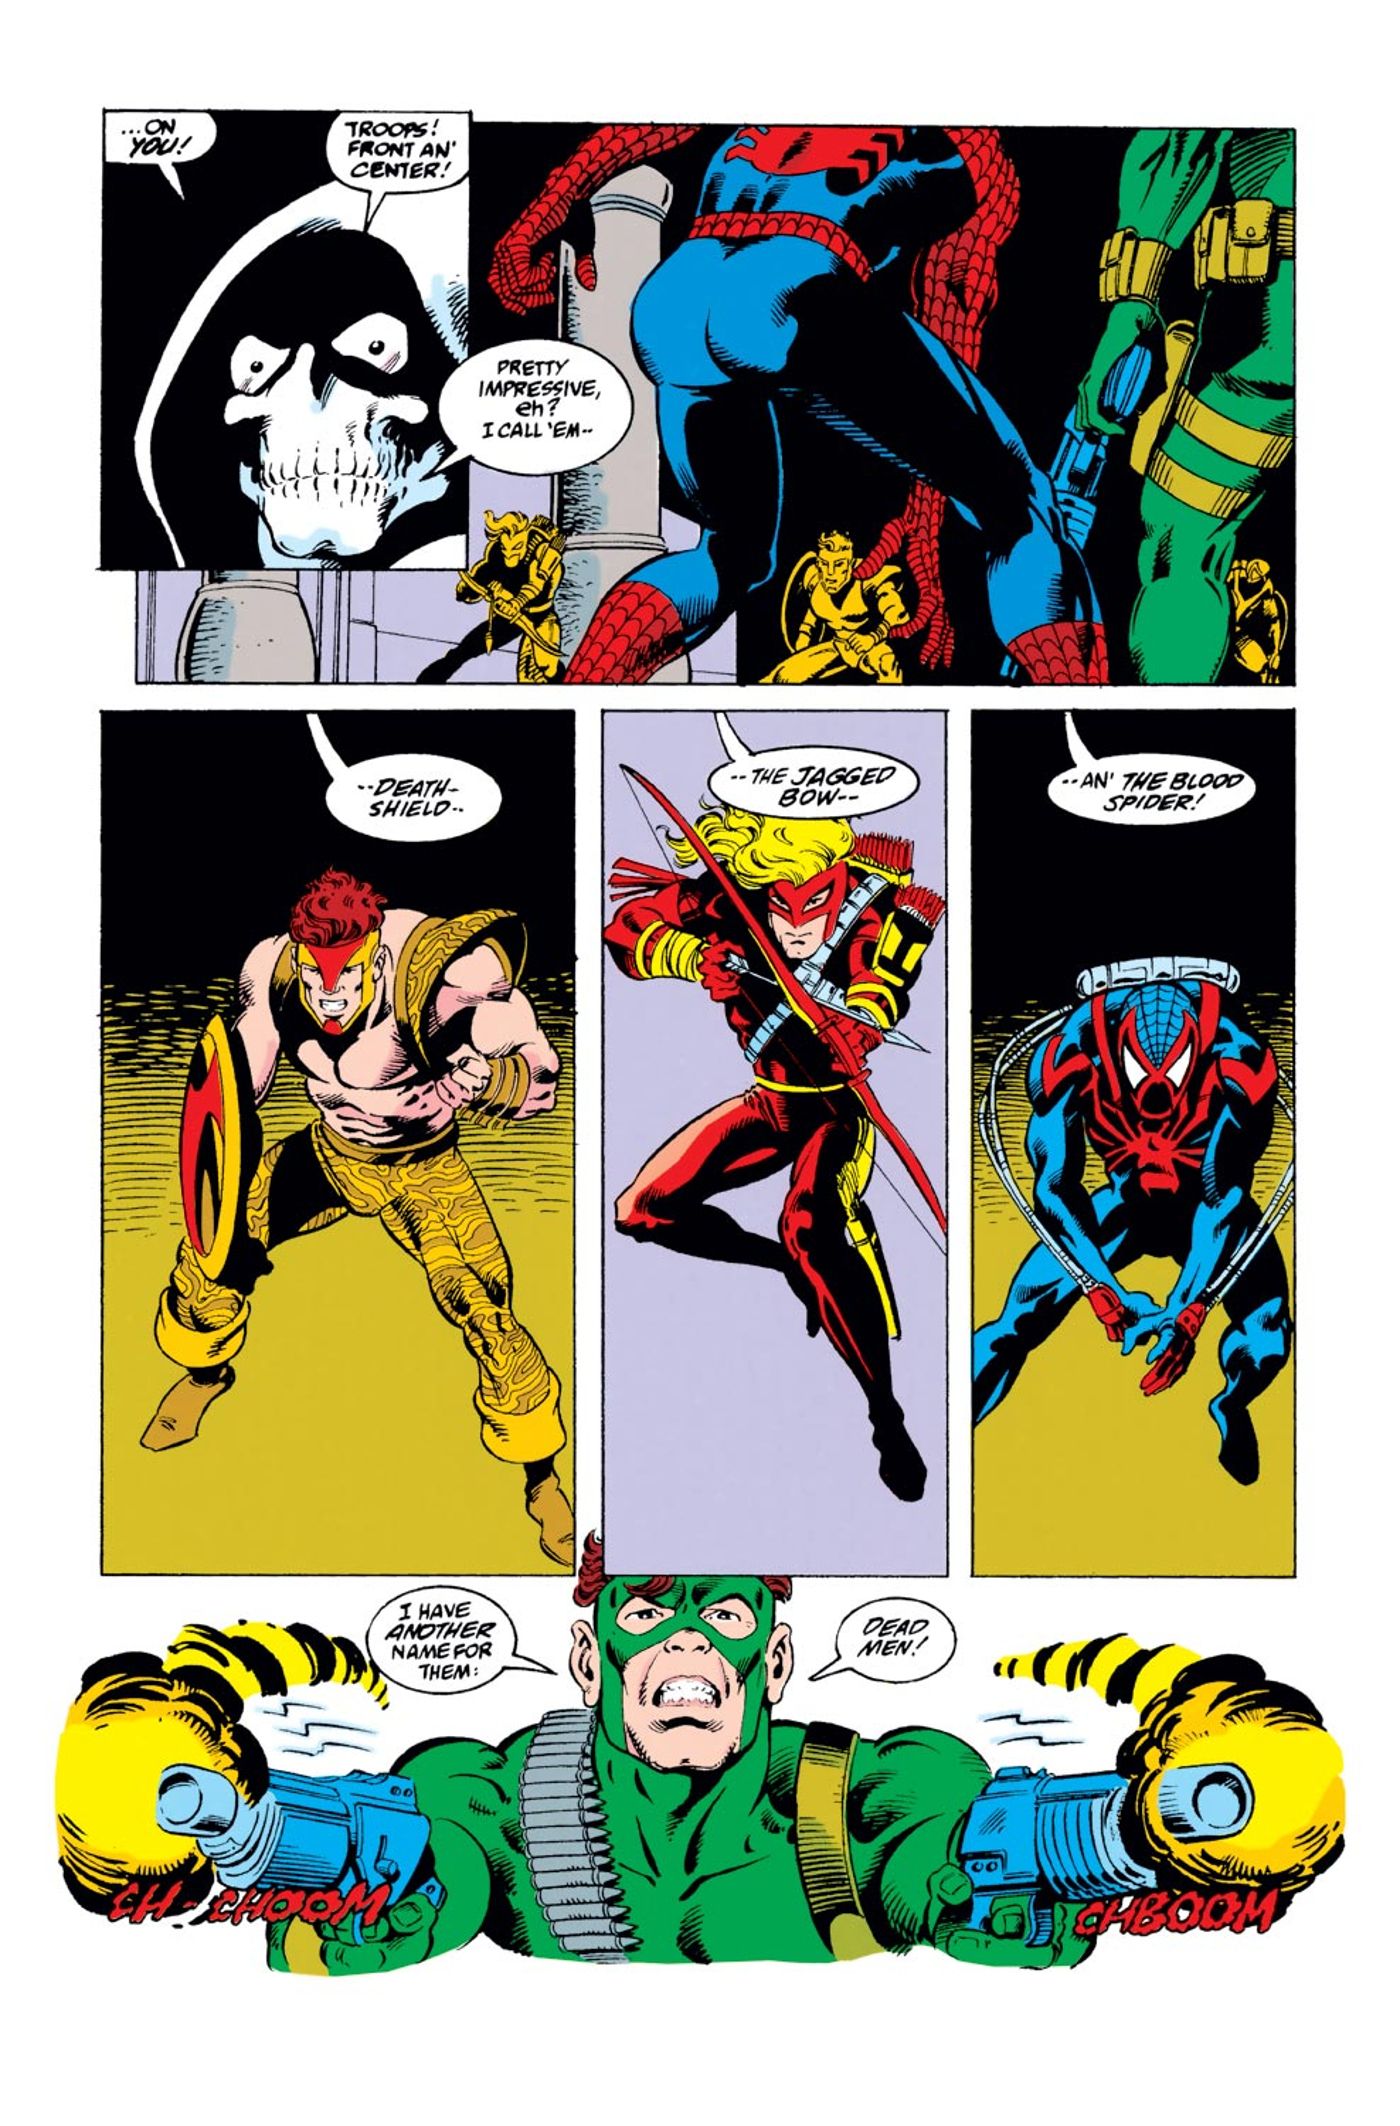 Spider-Man fights Taskmaster's dark Avengers.